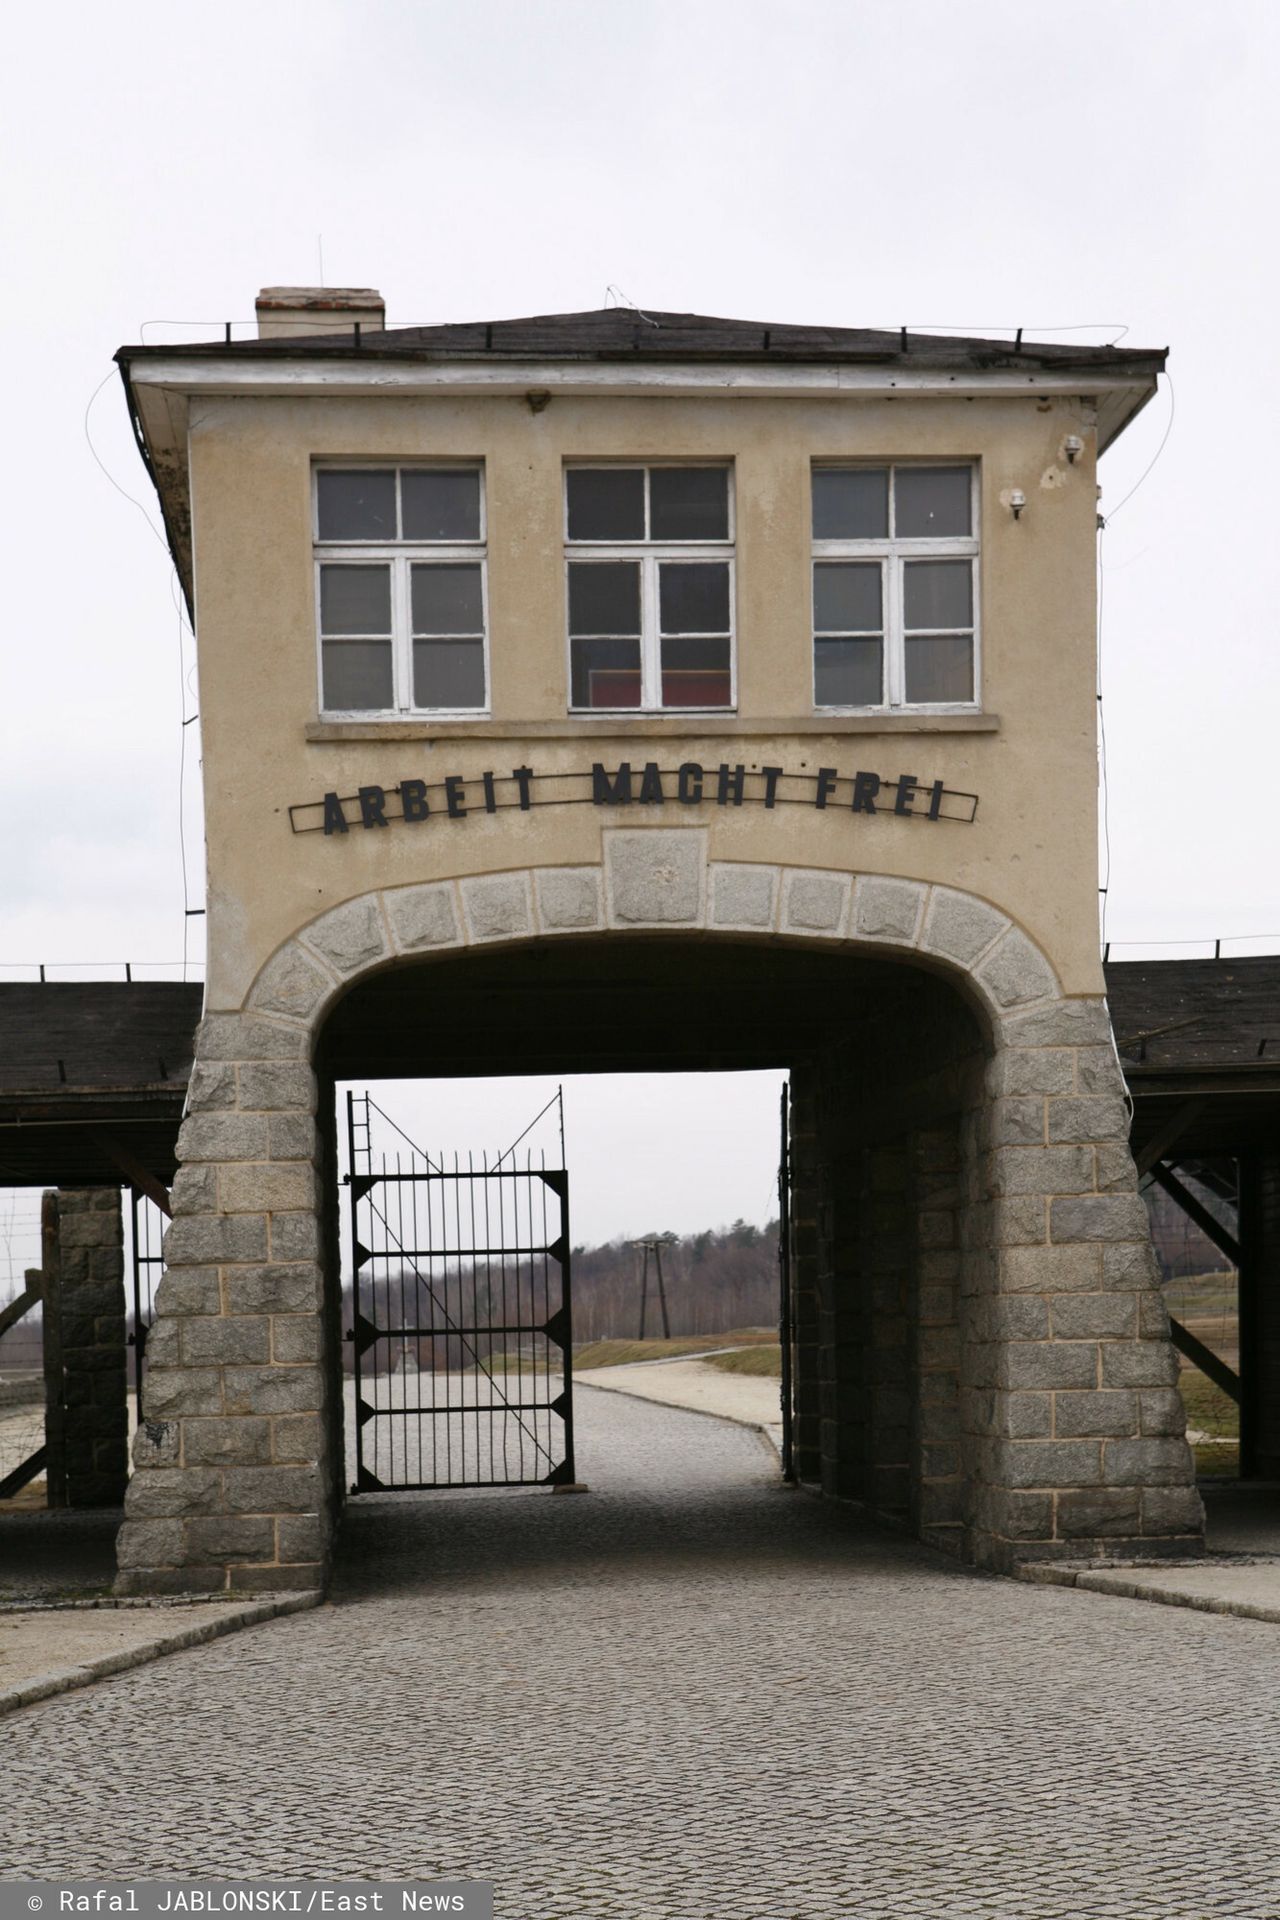 Nazistowski obóz koncentracyjny Gross-Rosen